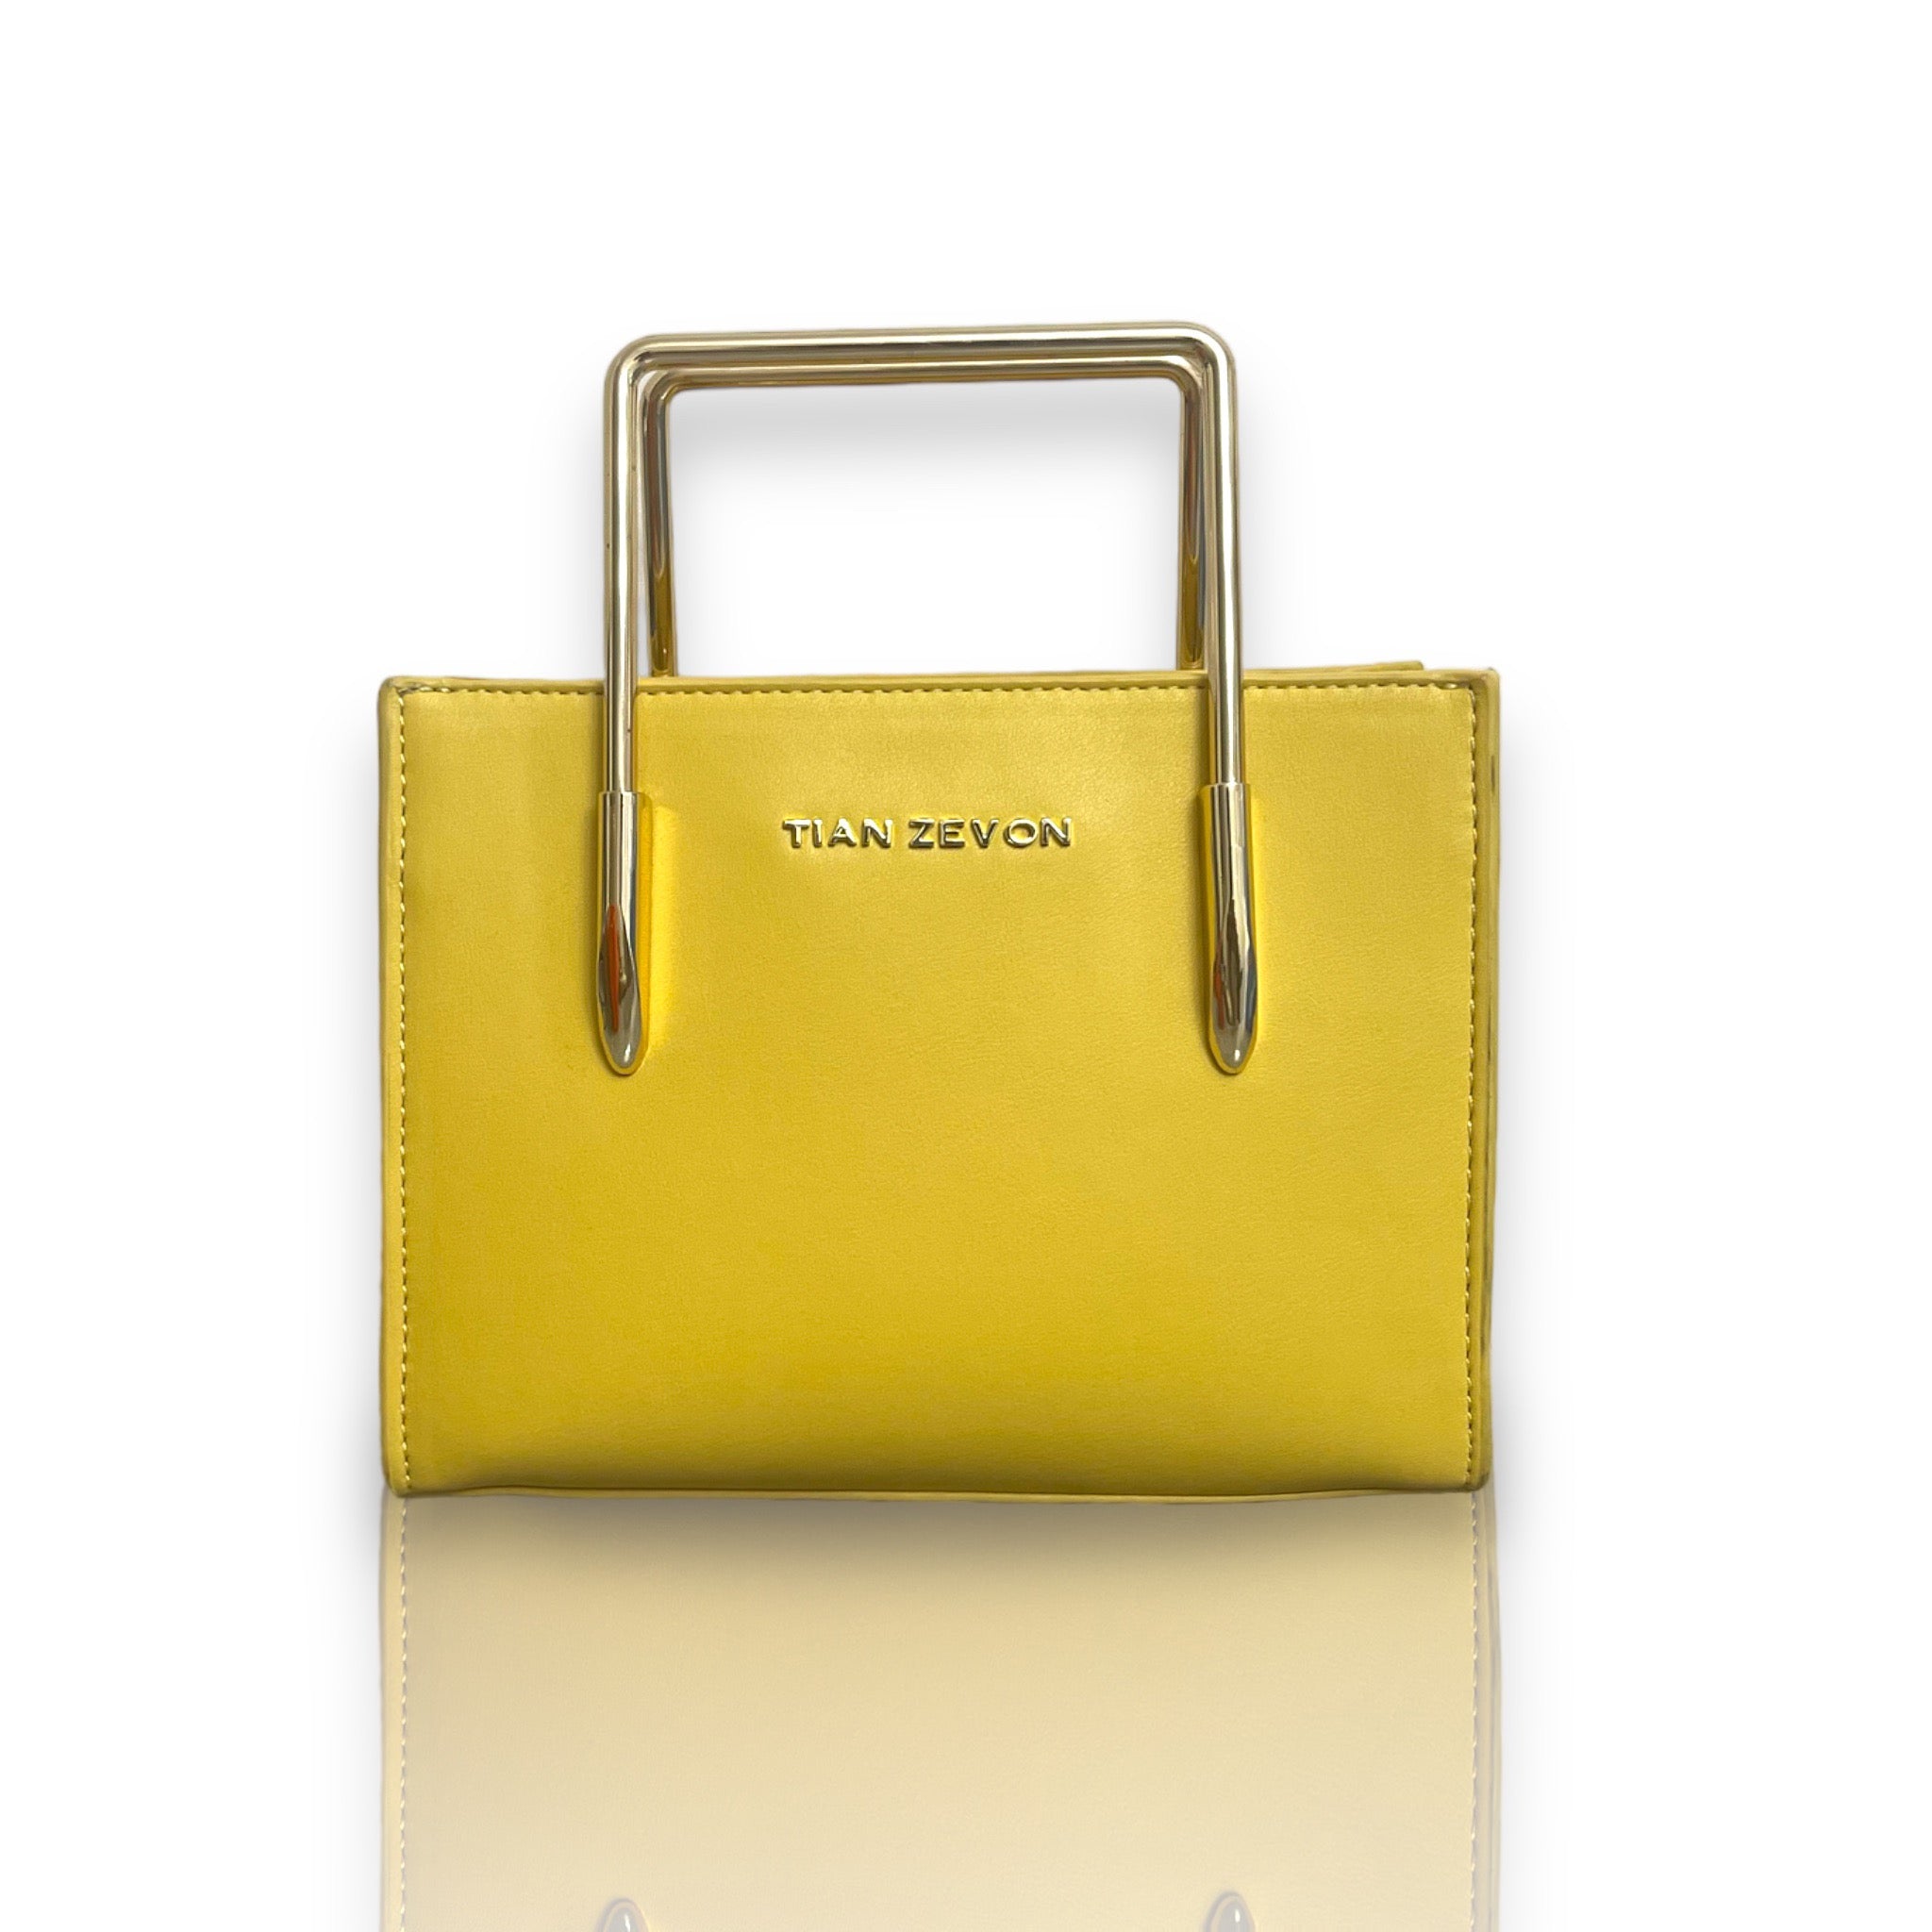 Nala Mini Leather tote bag - Mimosa Yellow